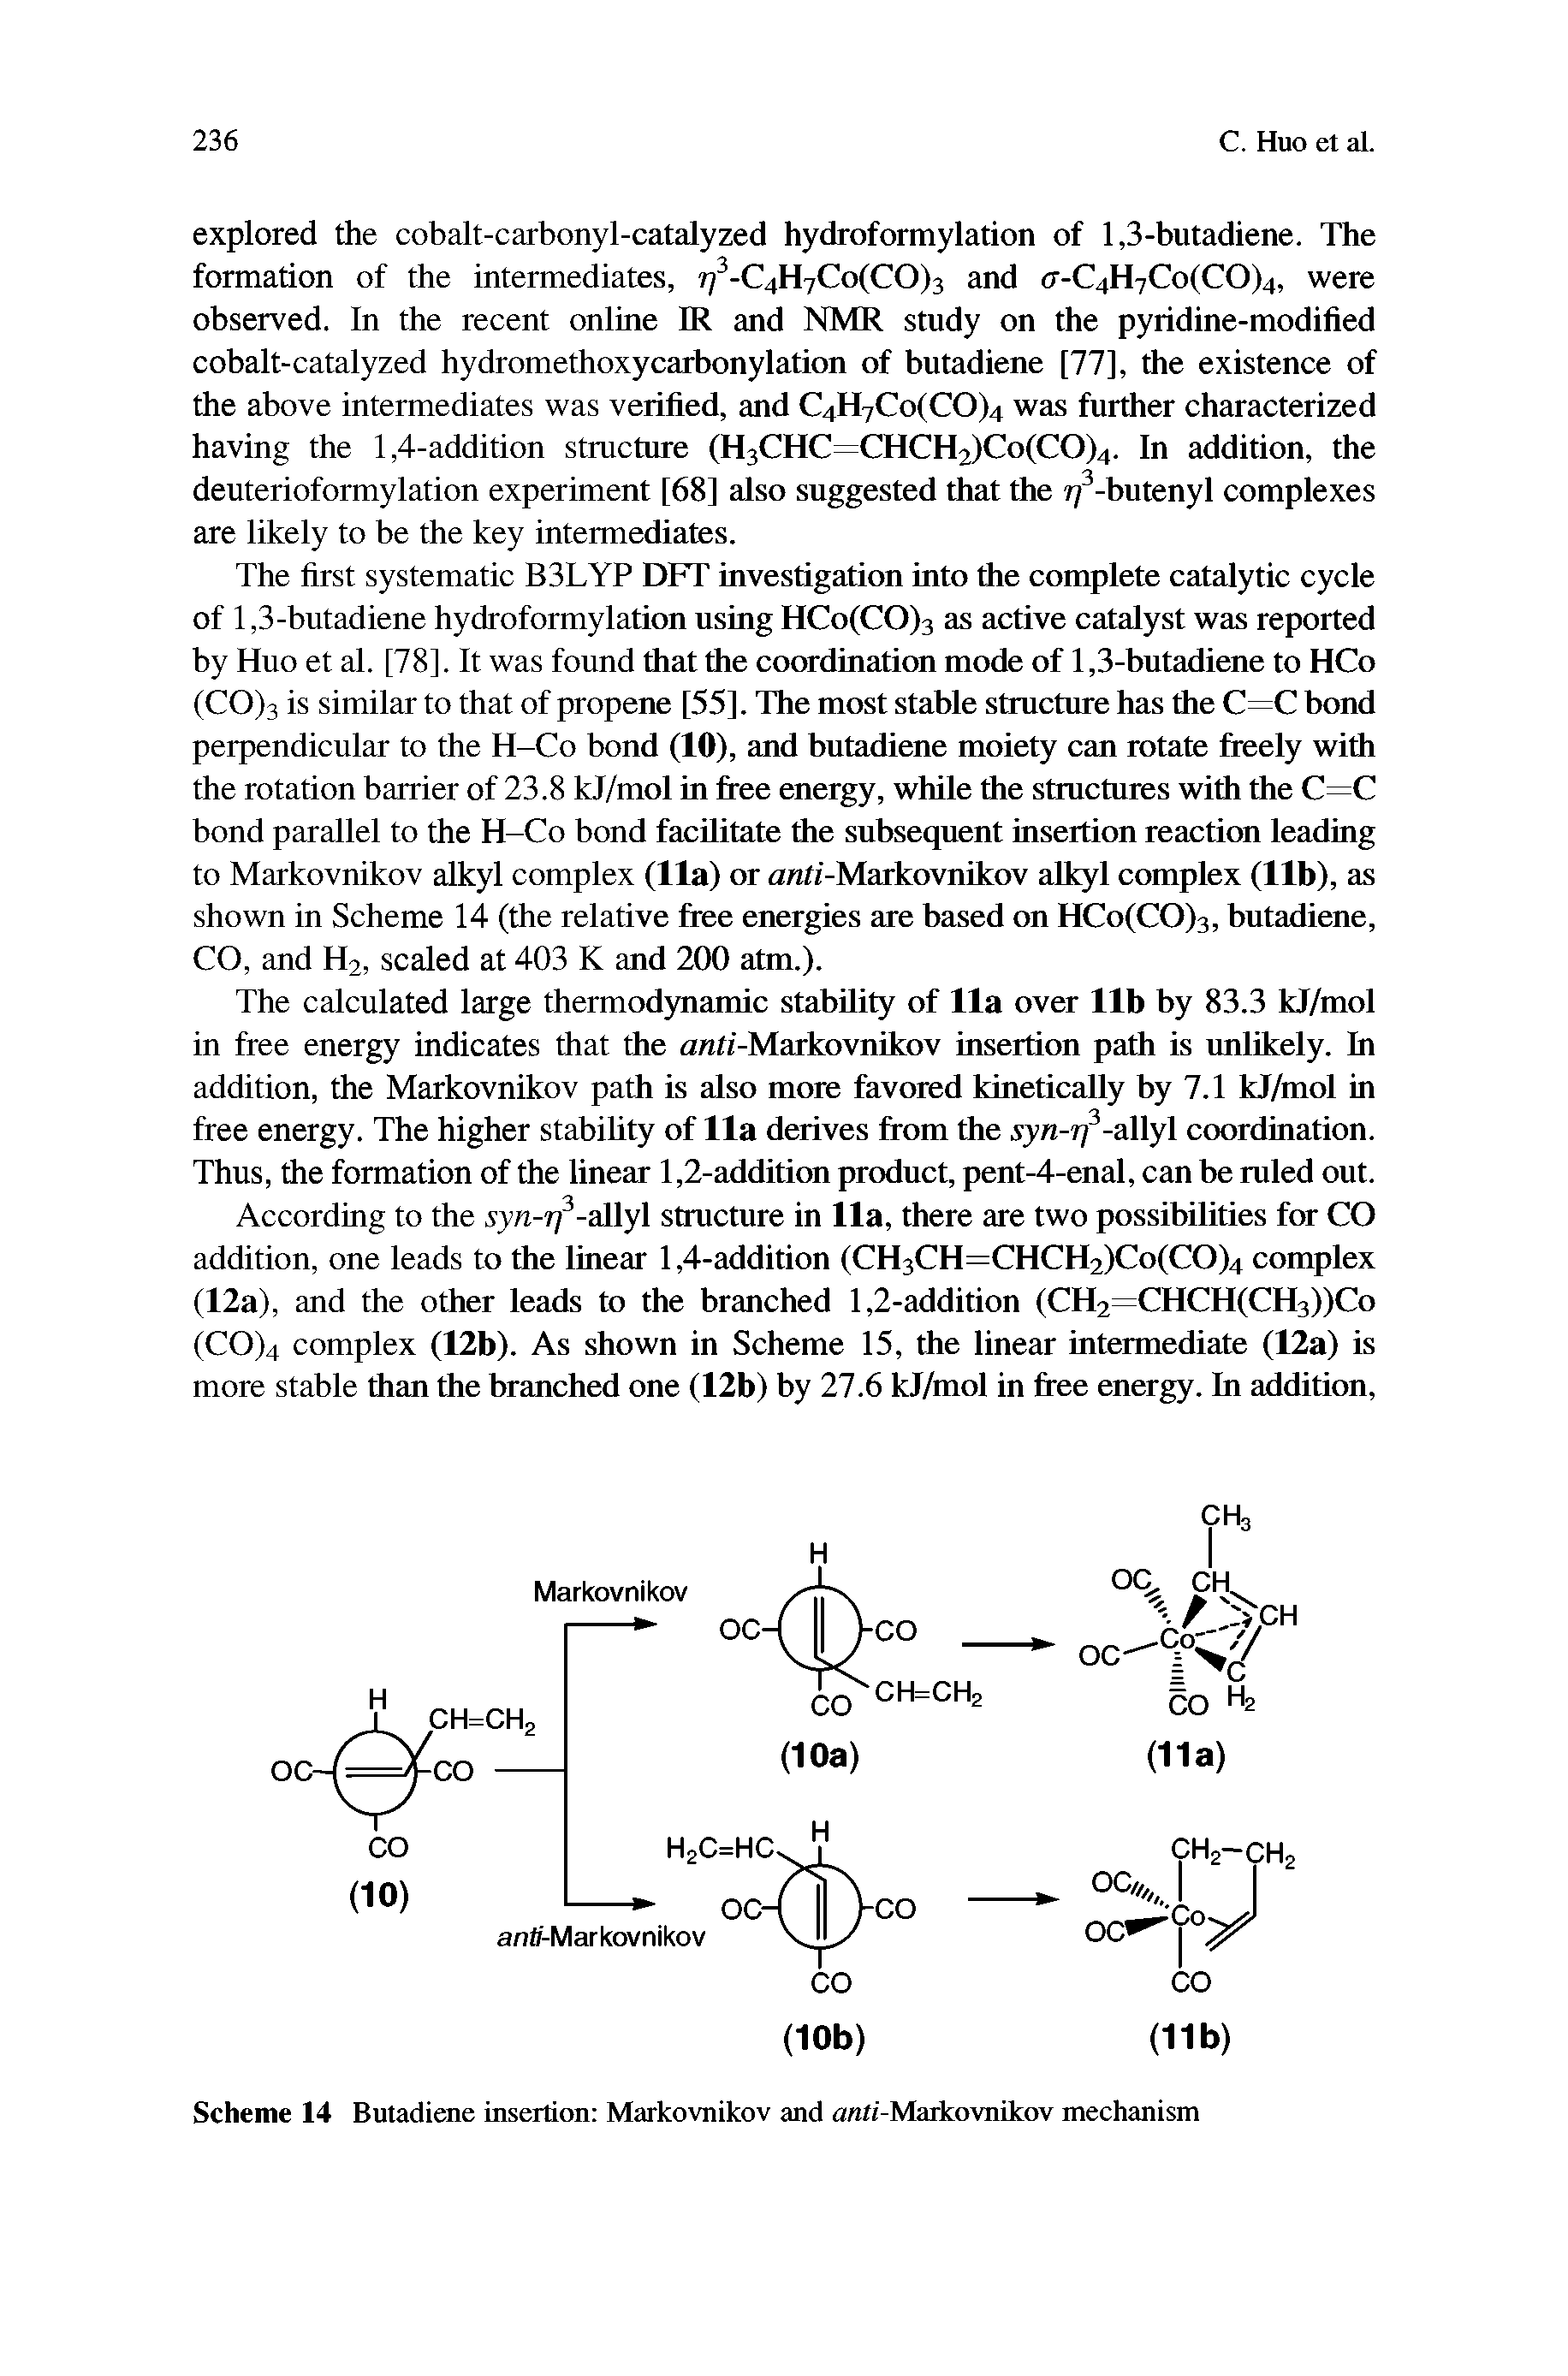 Scheme 14 Butadiene insertion Markovnikov and anti-Markovnikov mechanism...